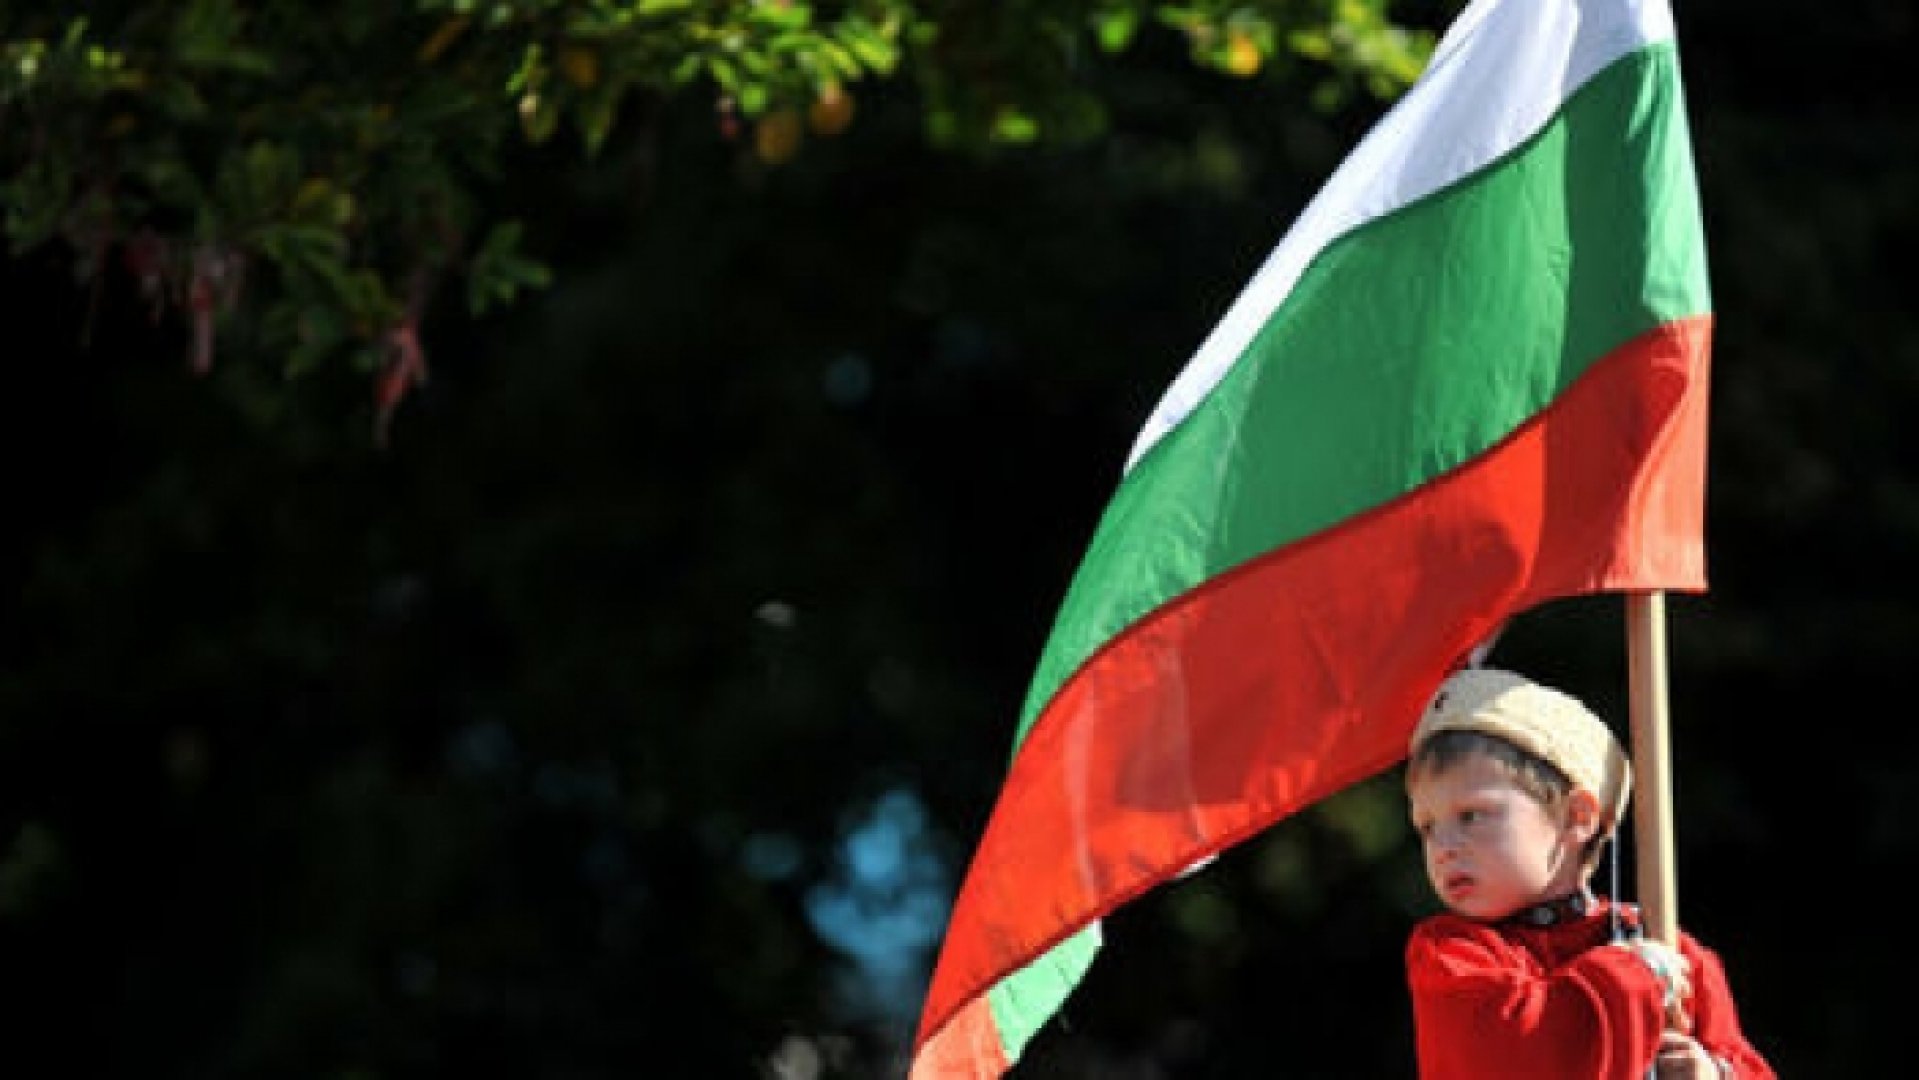 Честваме 111 години независима България - E-Burgas.com